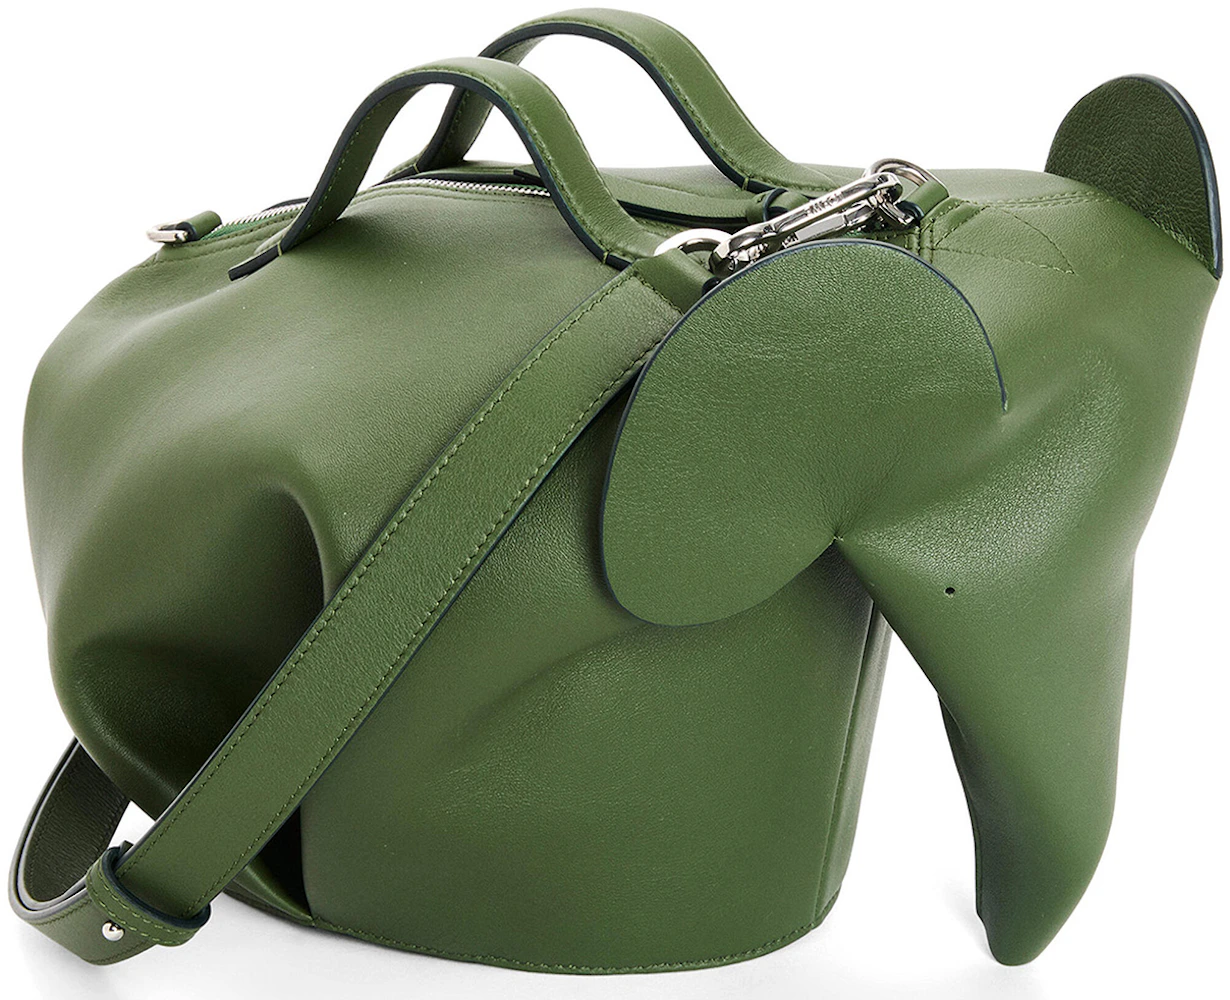 Loewe Women's Large Leather Elephant Bag - Tan